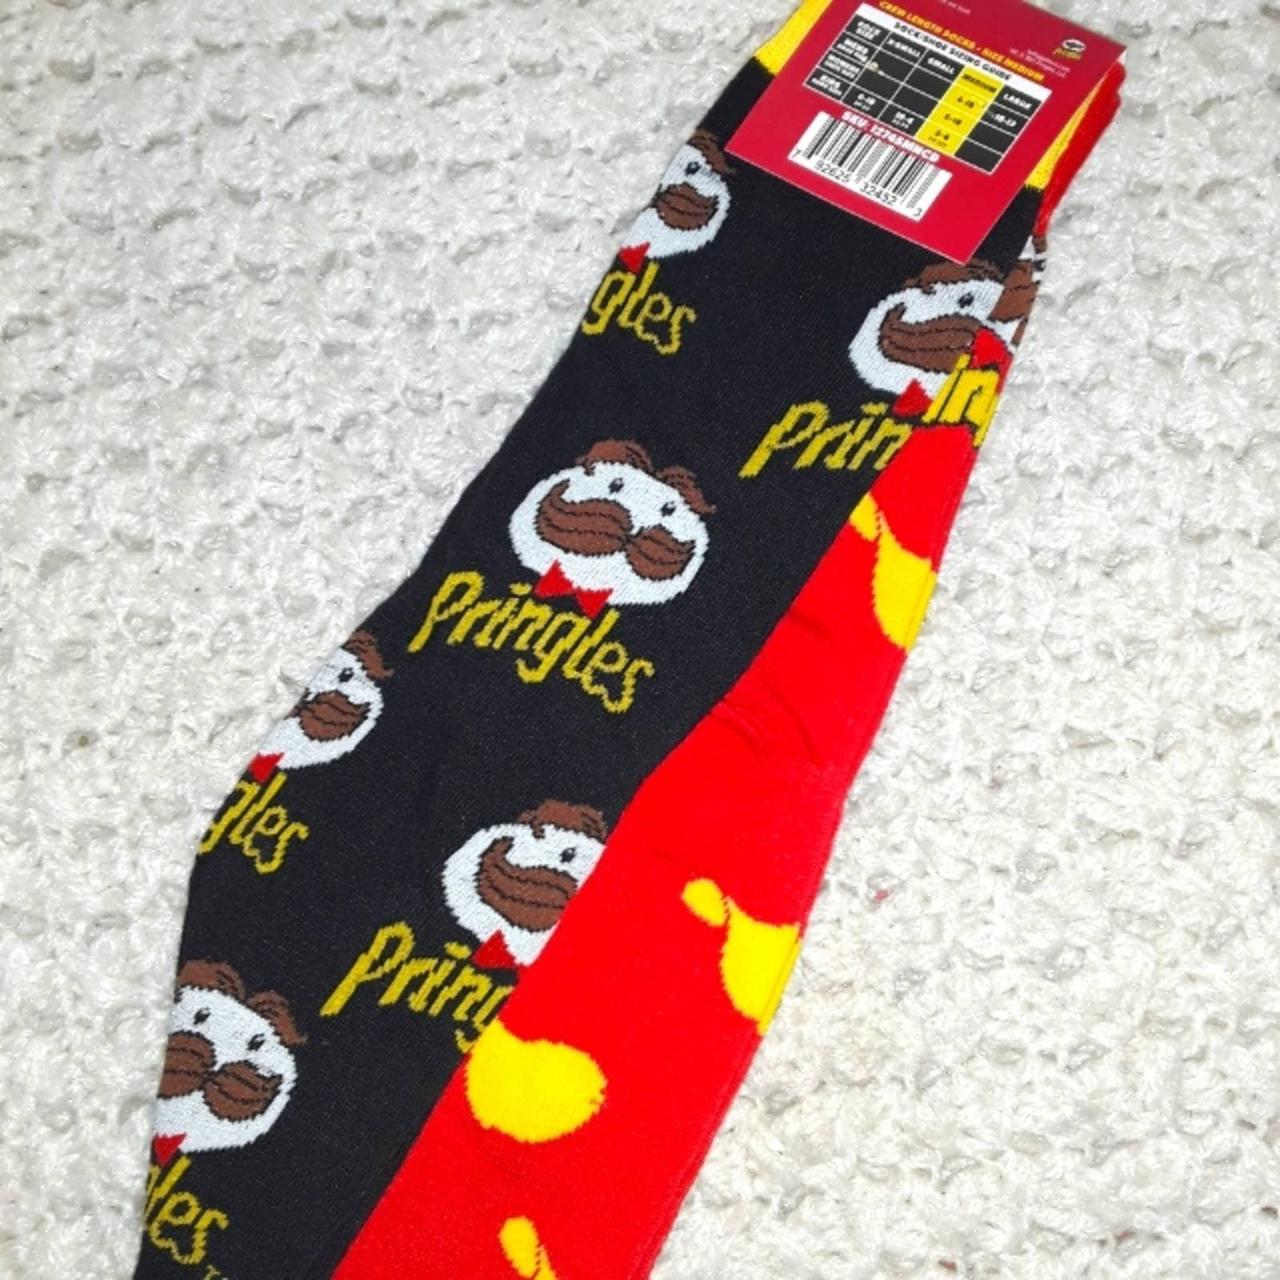 Product Image 3 - Pringles chips socks uni-sex size